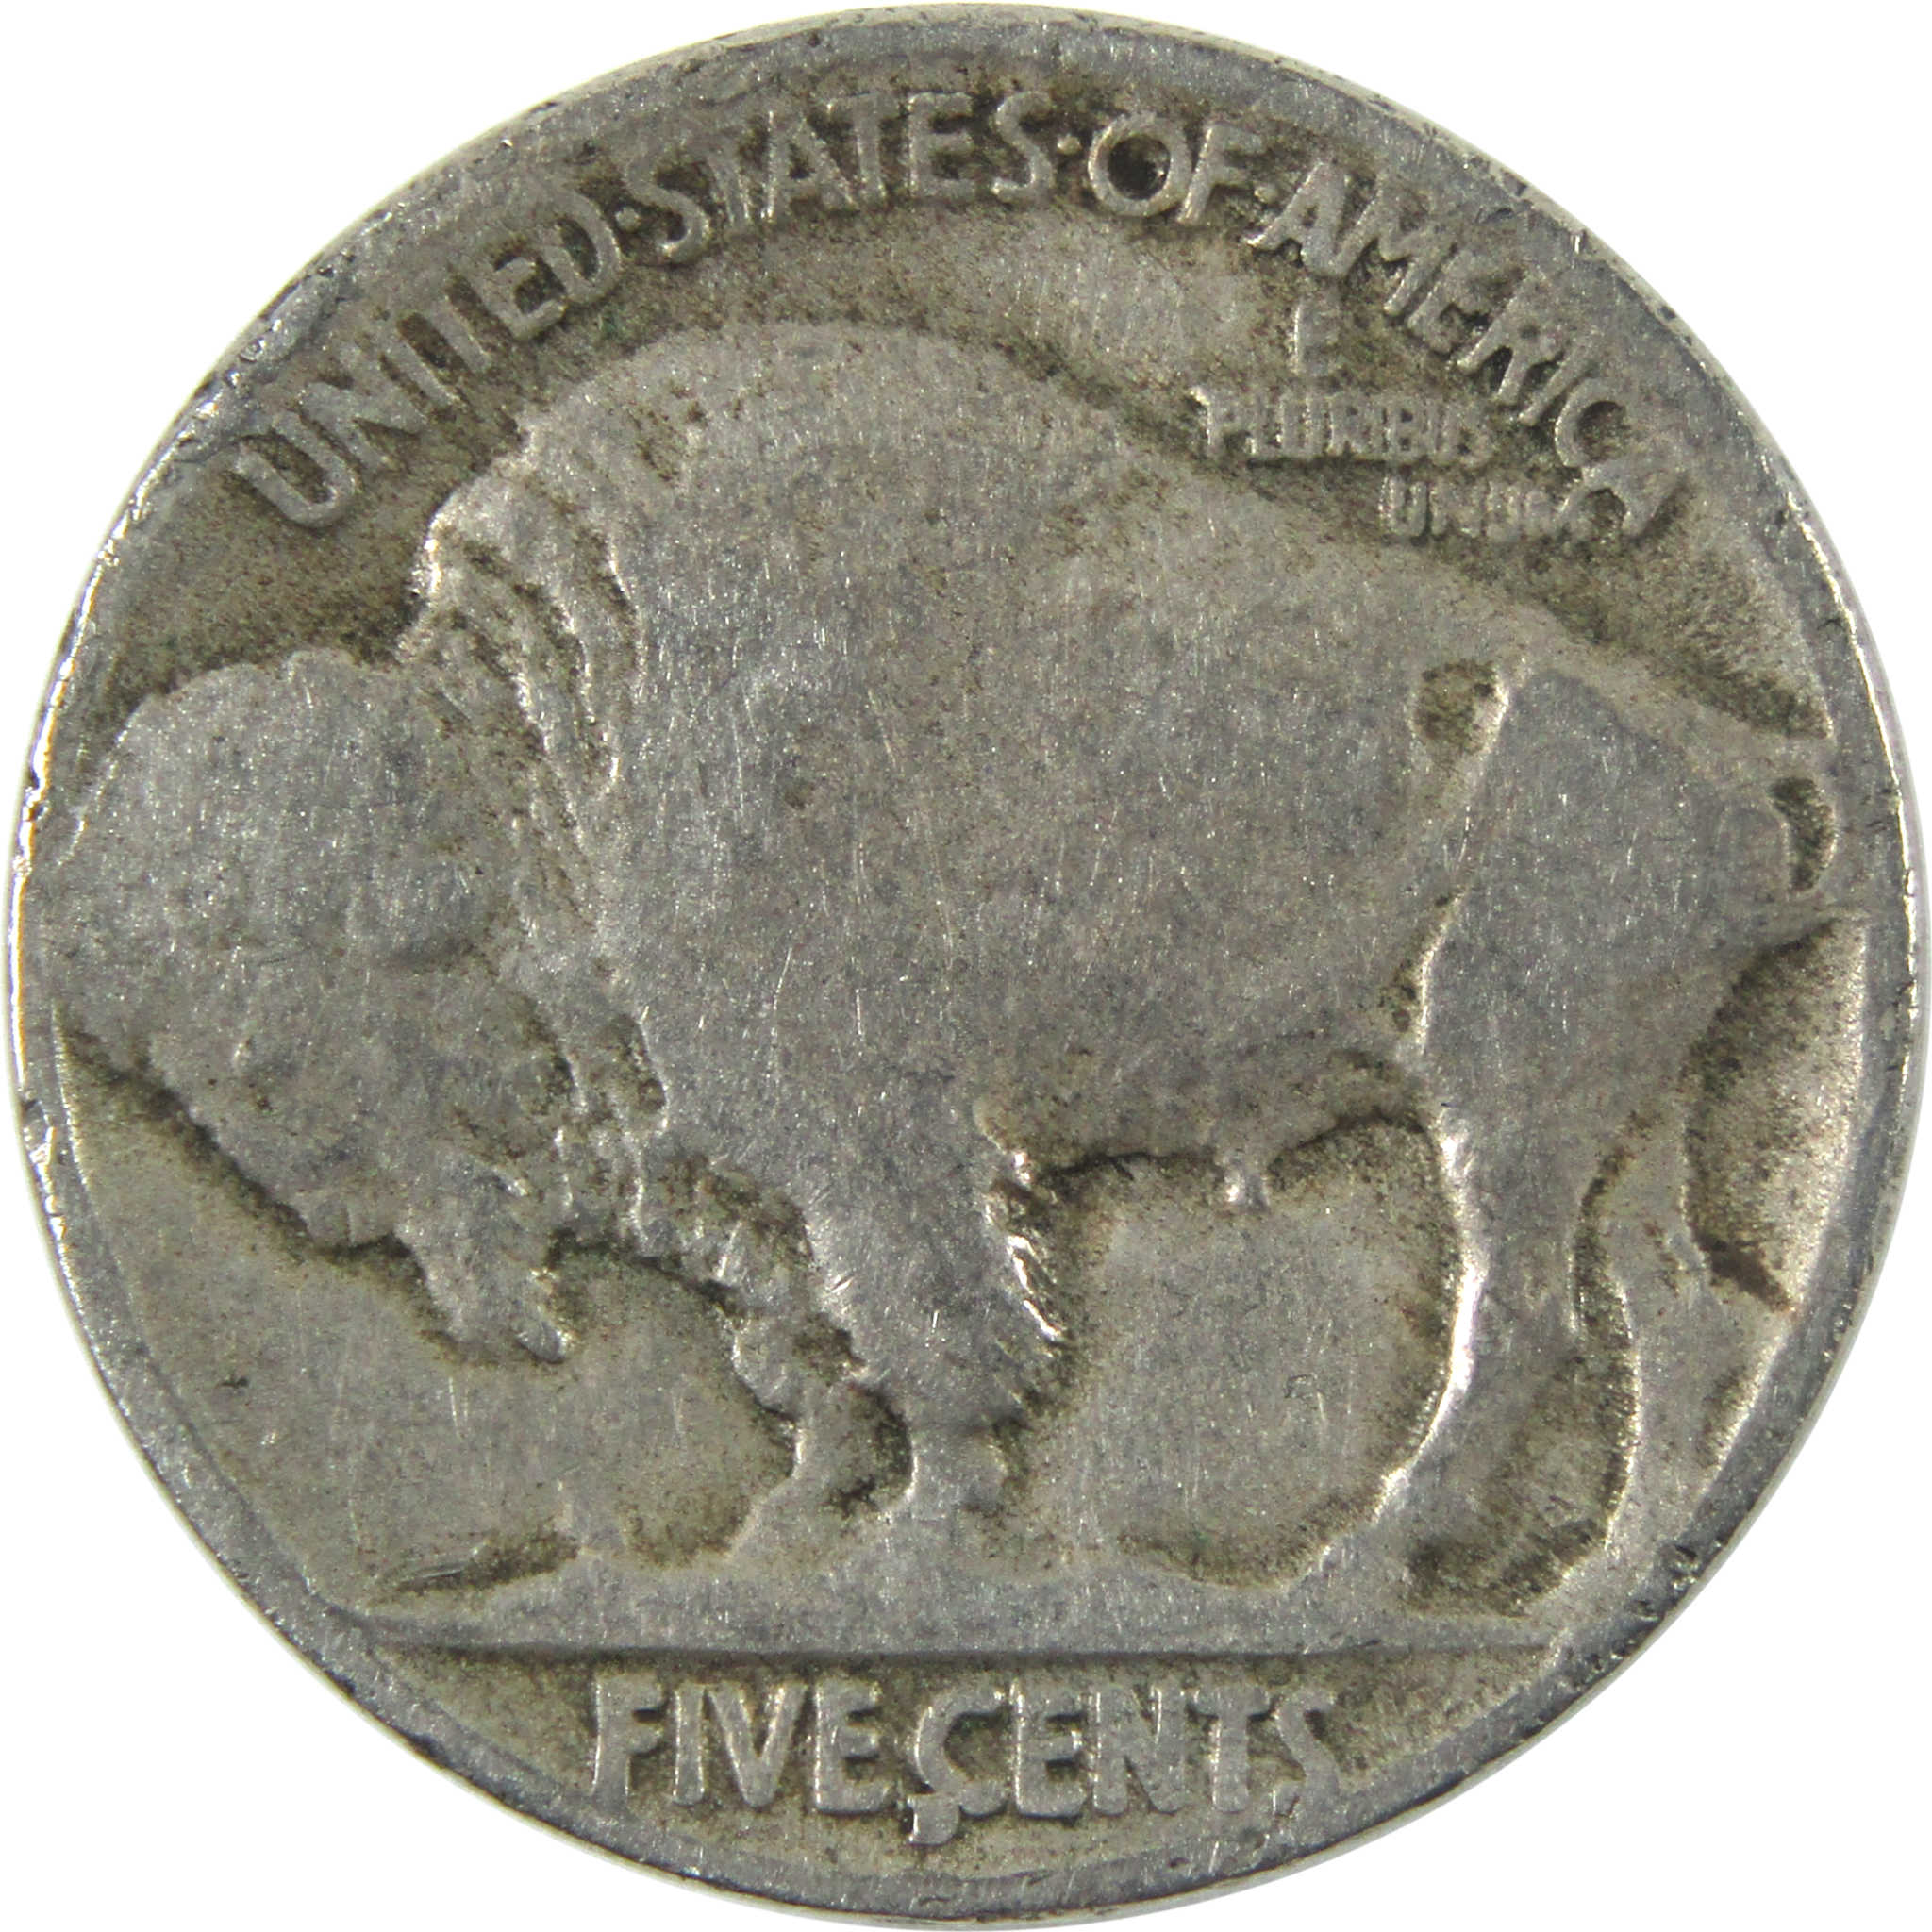 1916 D Indian Head Buffalo Nickel VG Very Good Details SKU:CPC6317